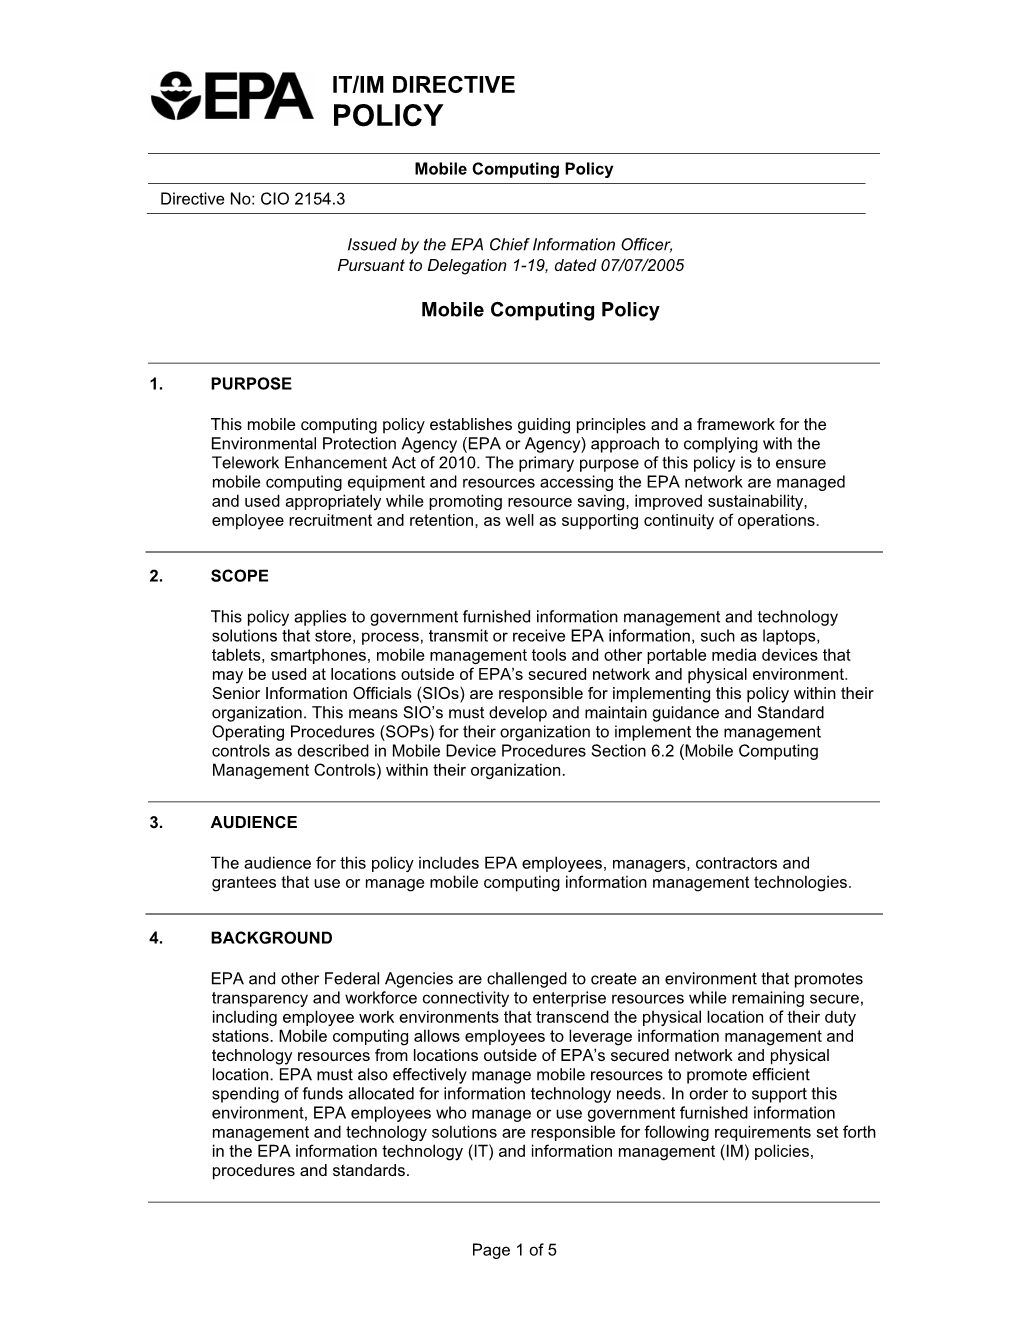 Mobile Computing Policy, Directive # CIO 2154.3